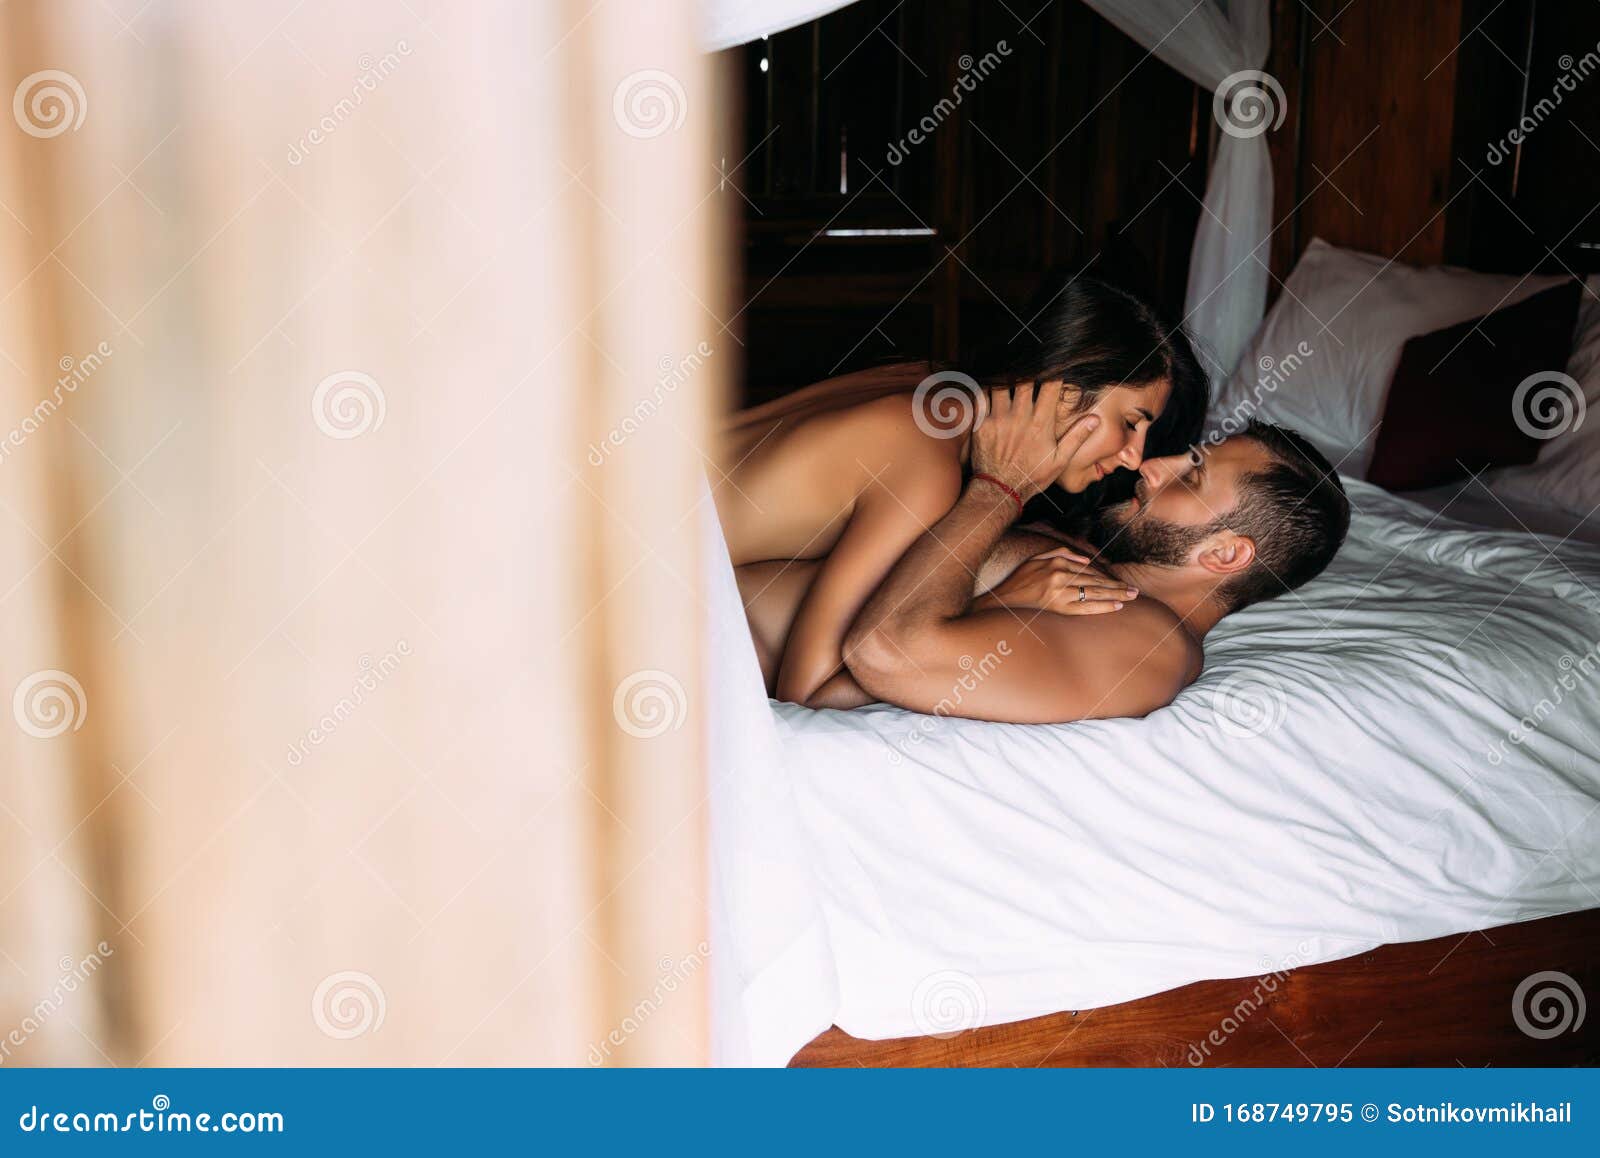 ansoumane douty diakite share men and women making love photos